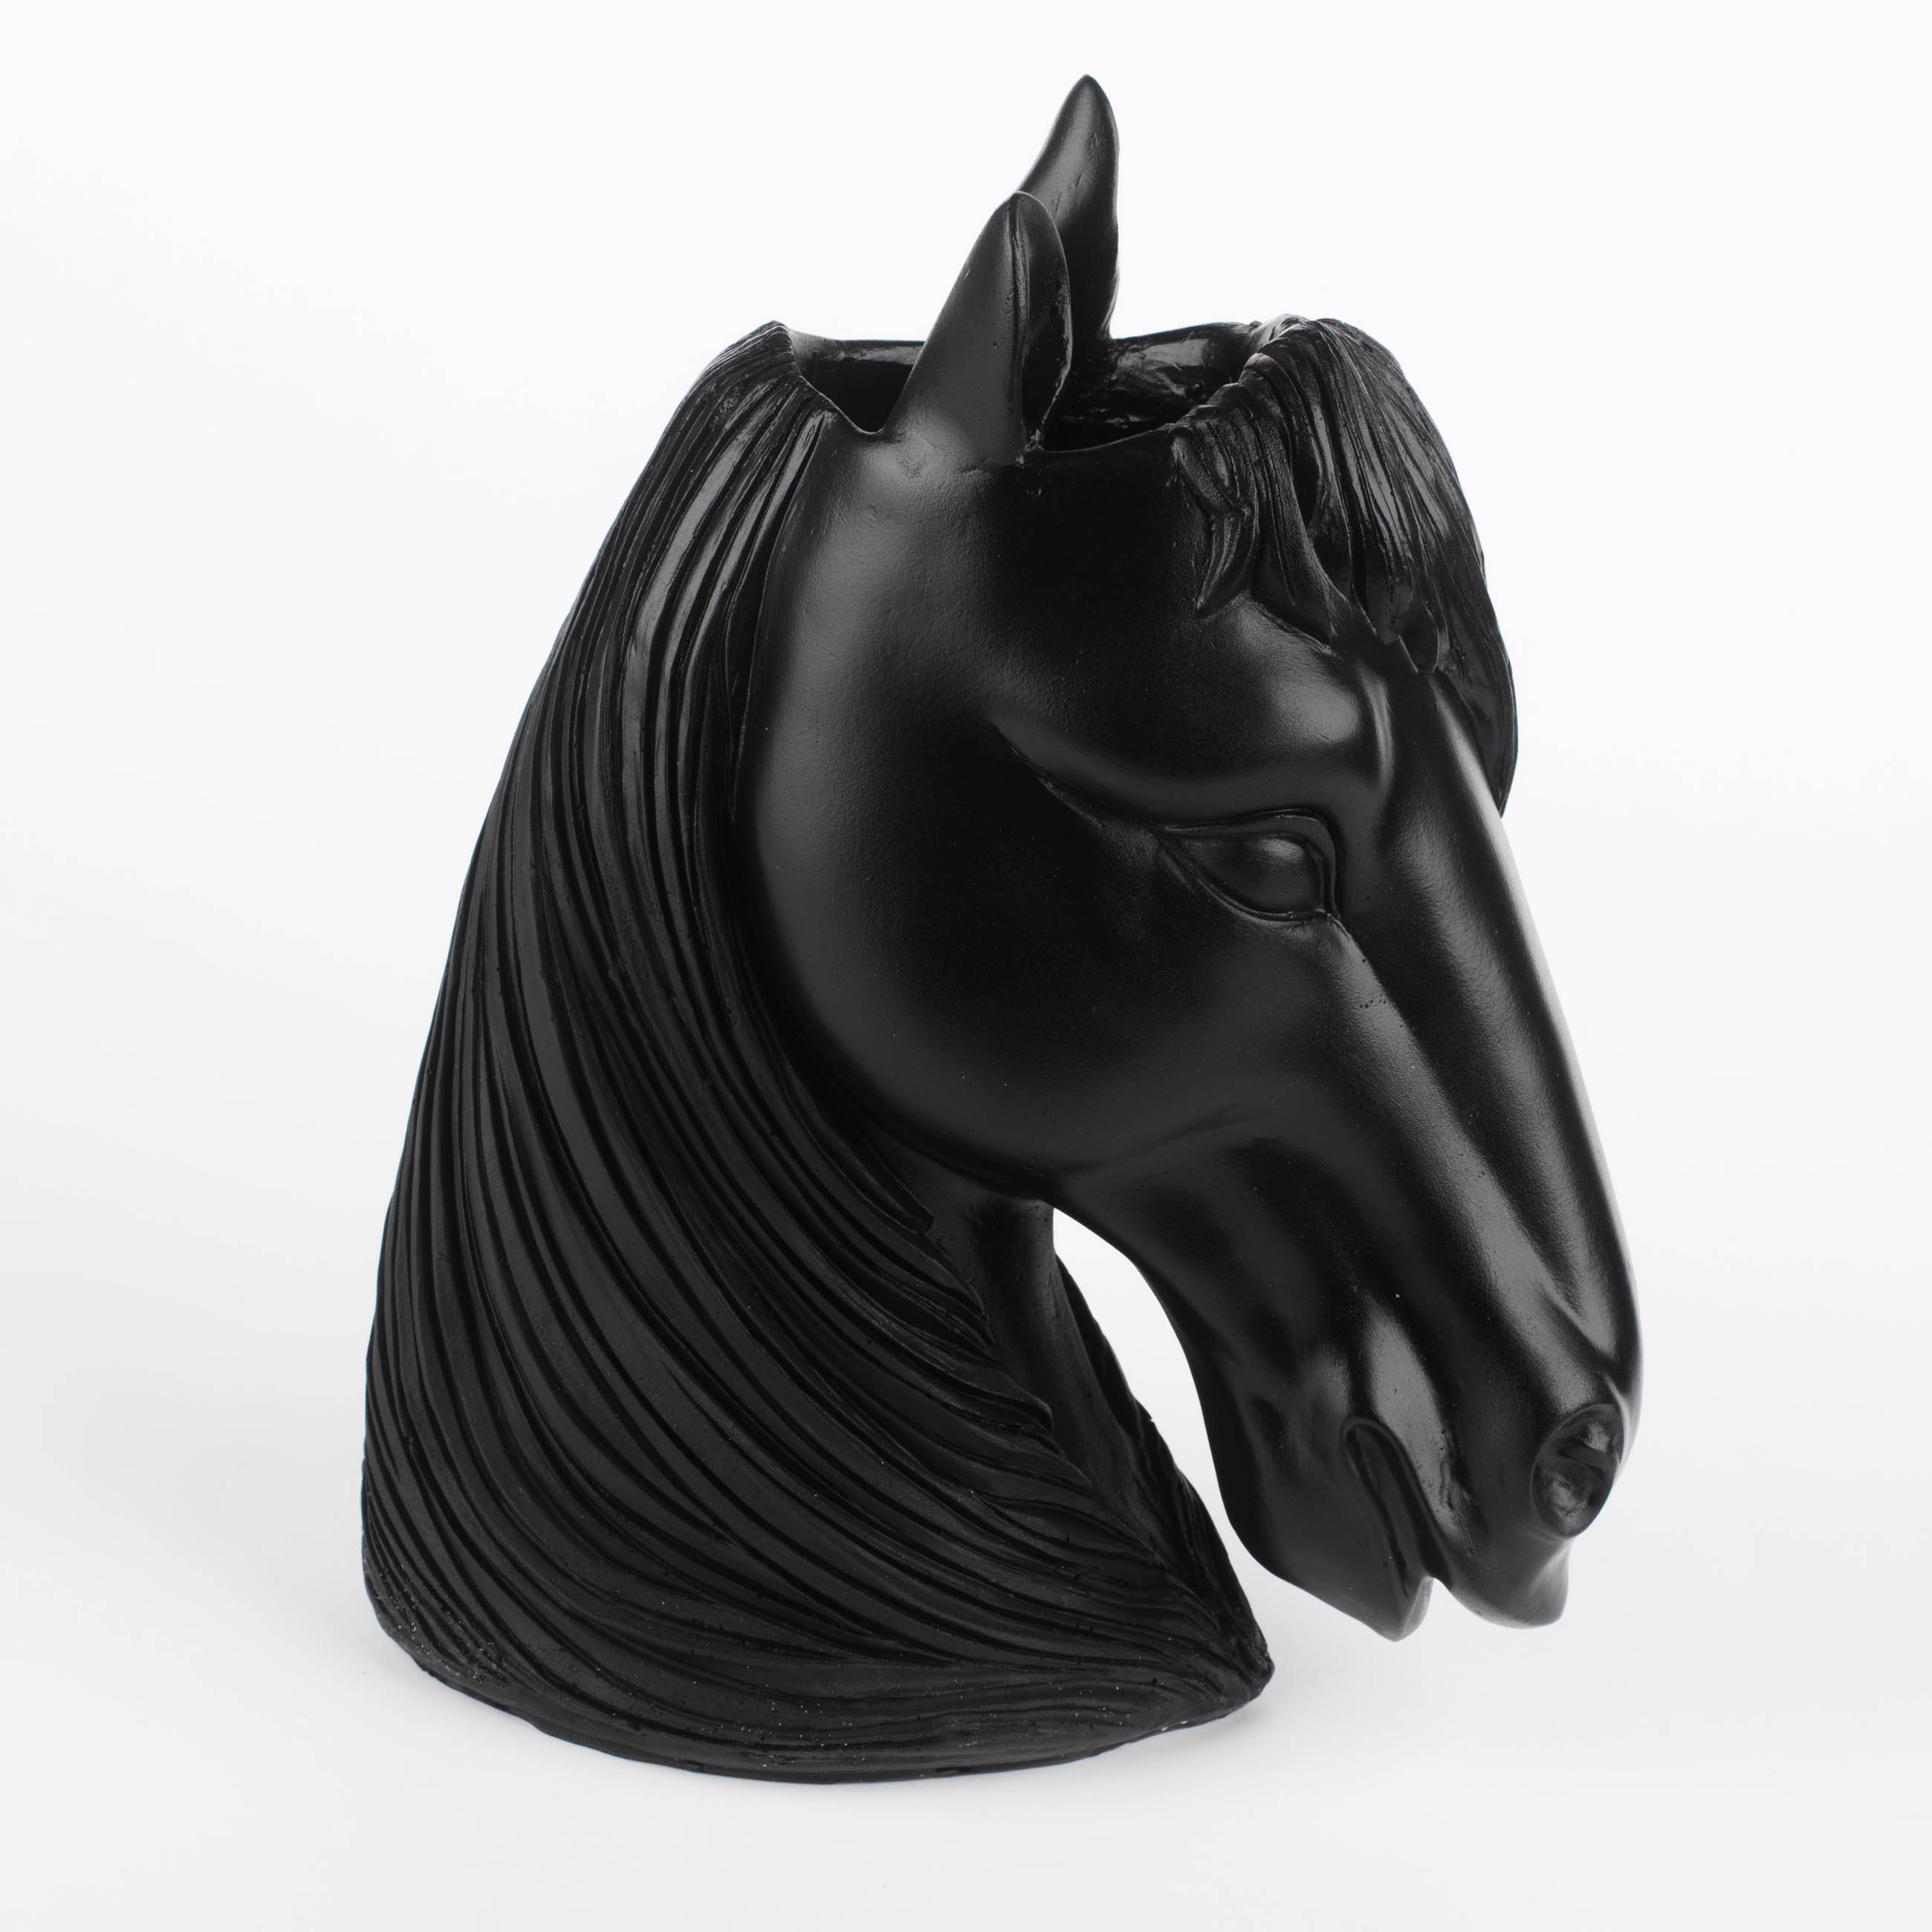 Decorative vase, 25 cm, polyresin, black, Horse head, Horse изображение № 2